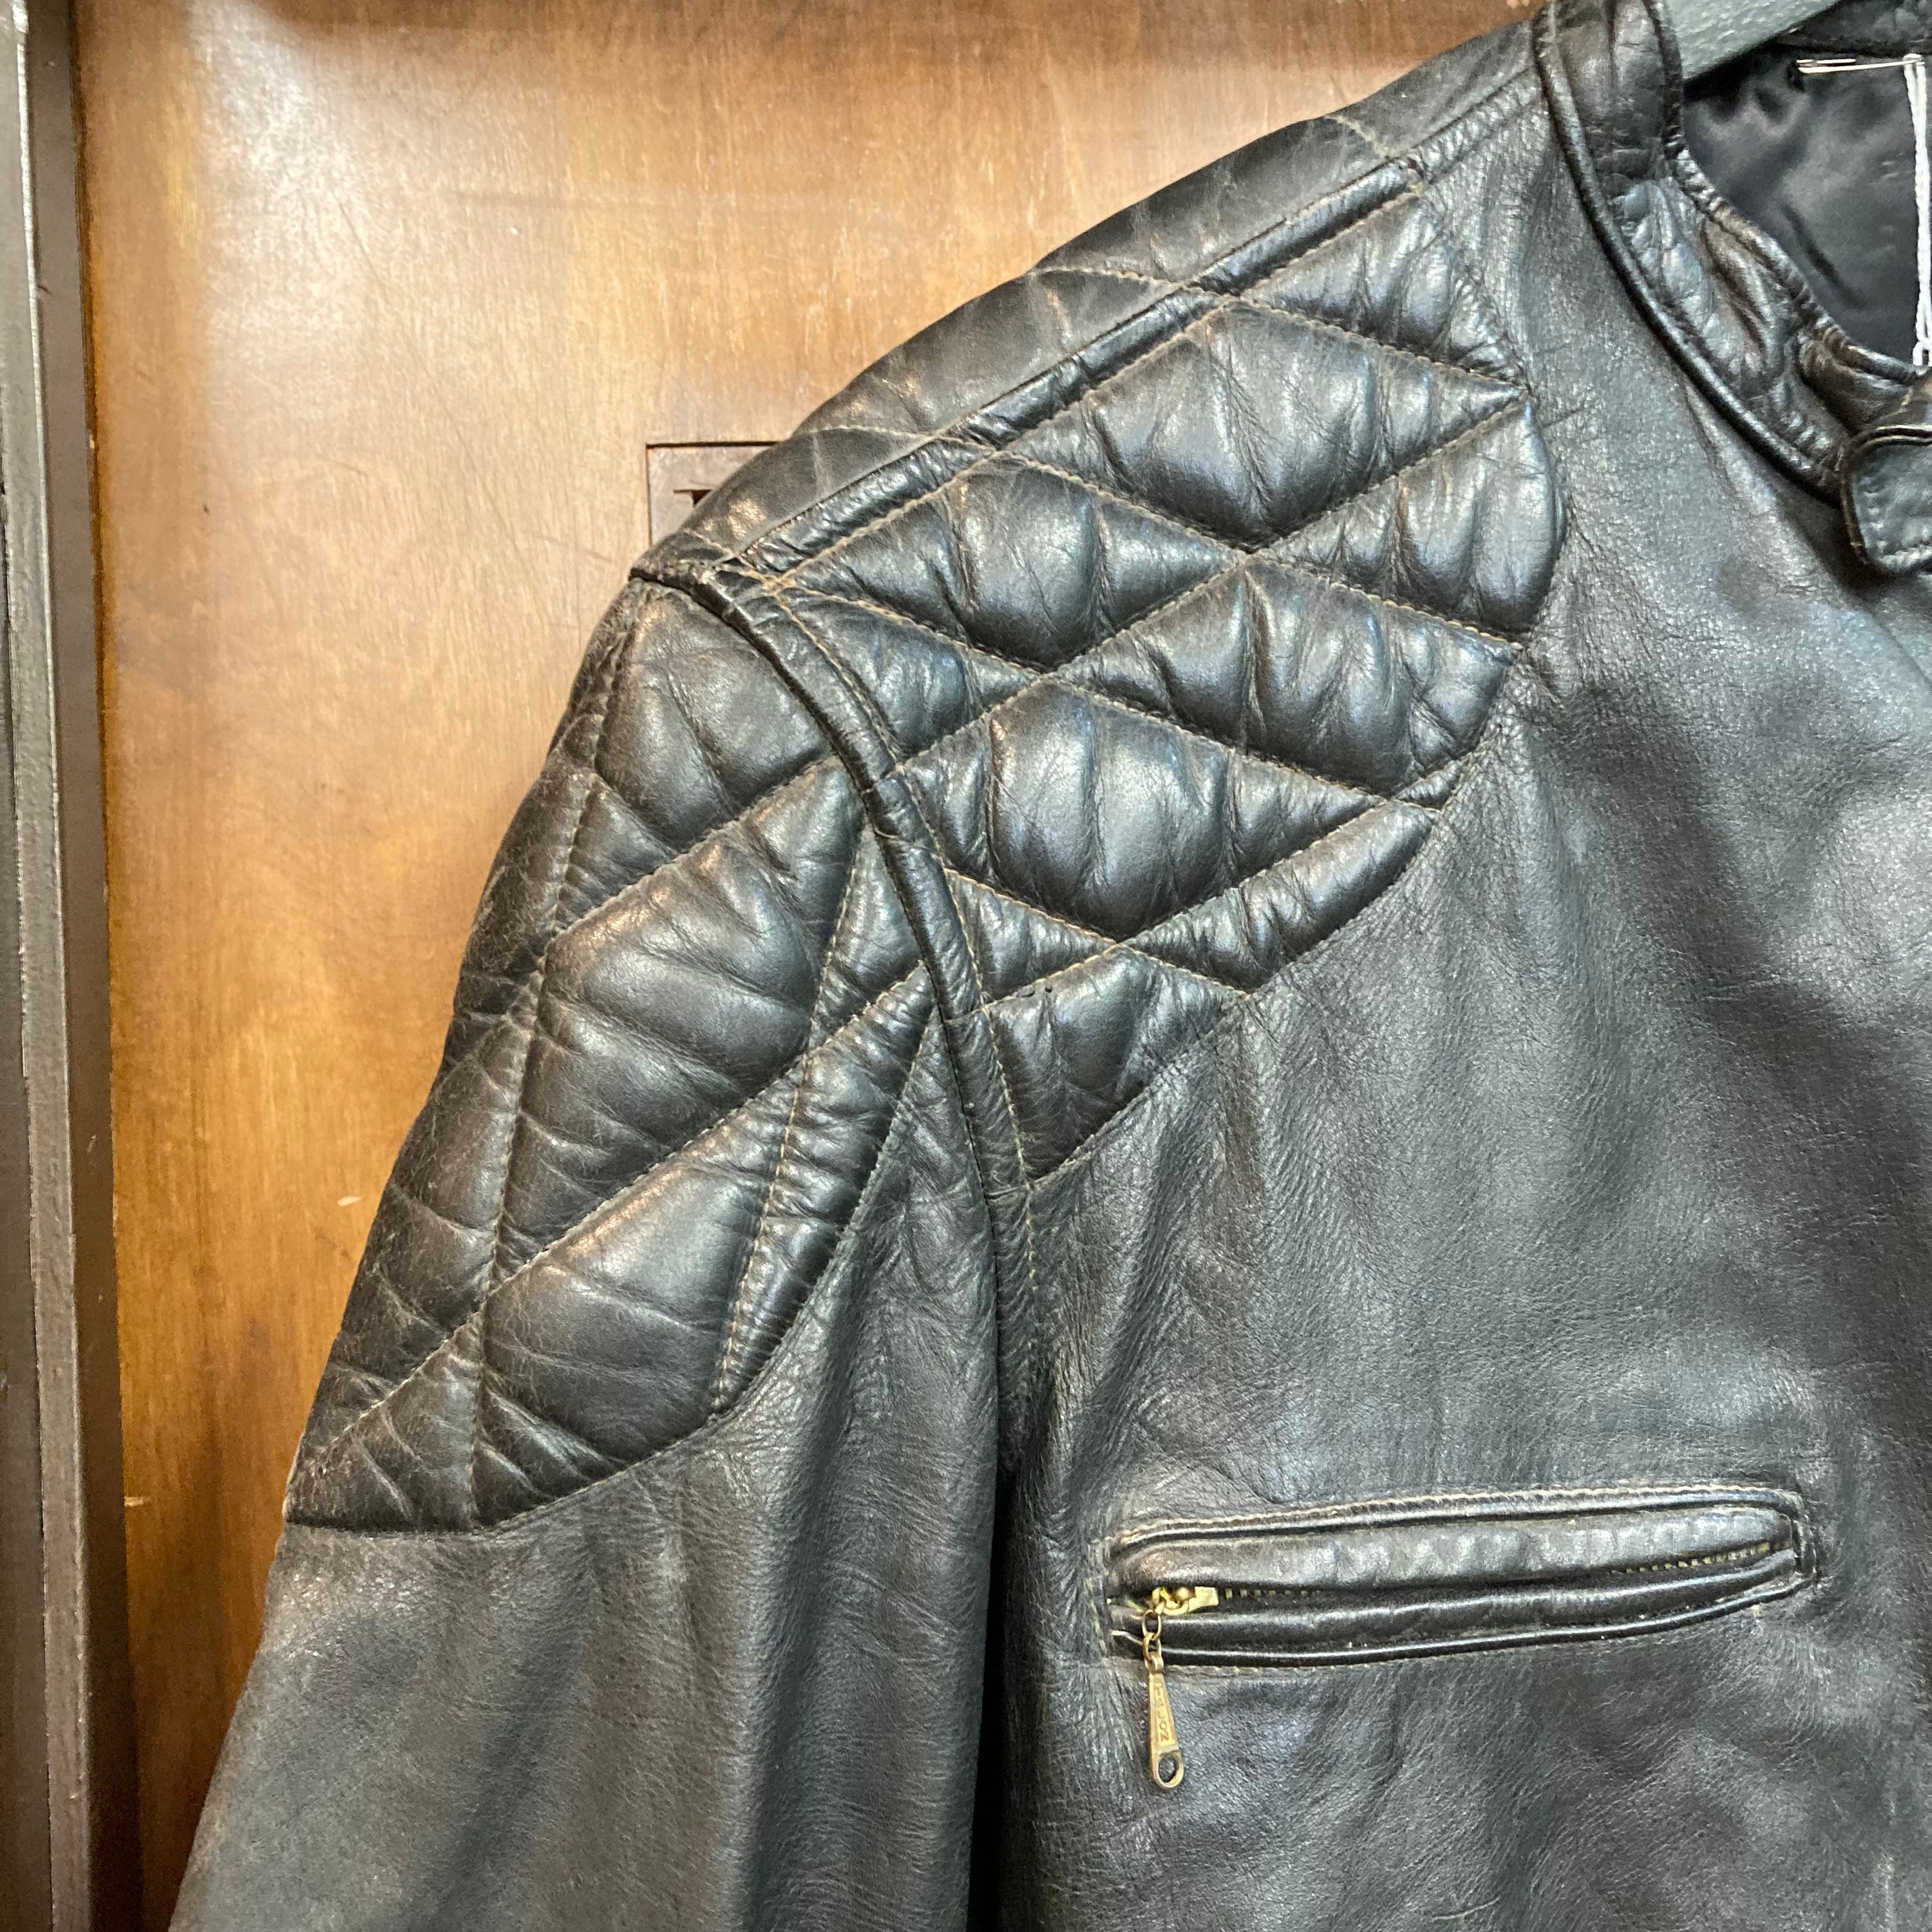 Vintage Black Classic Motorcycle Jacket #MA026K